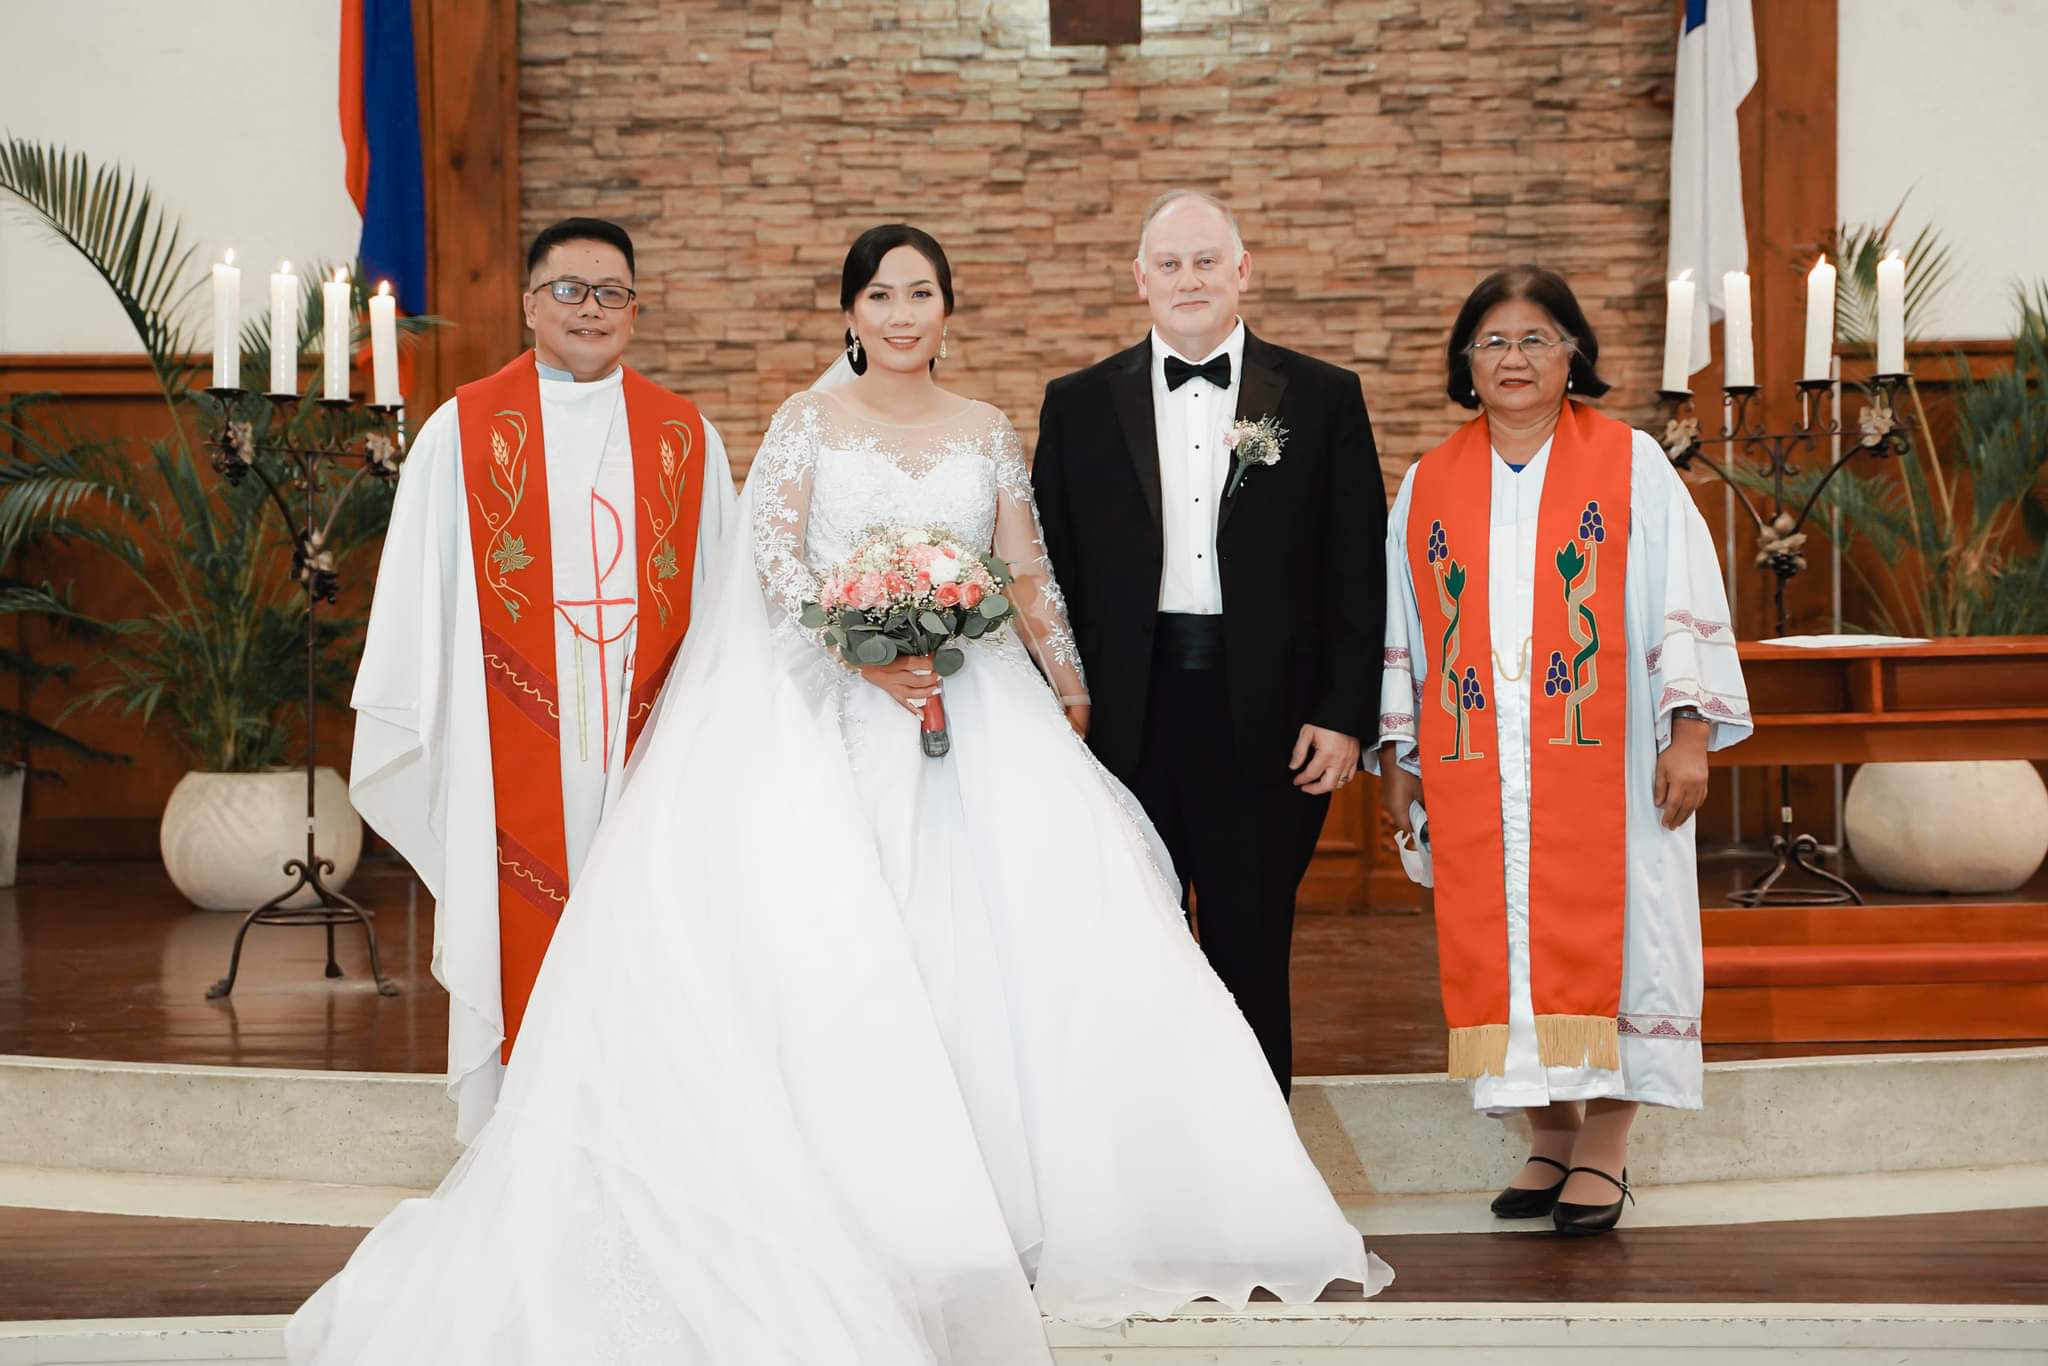 An interracial wedding ceremony at church